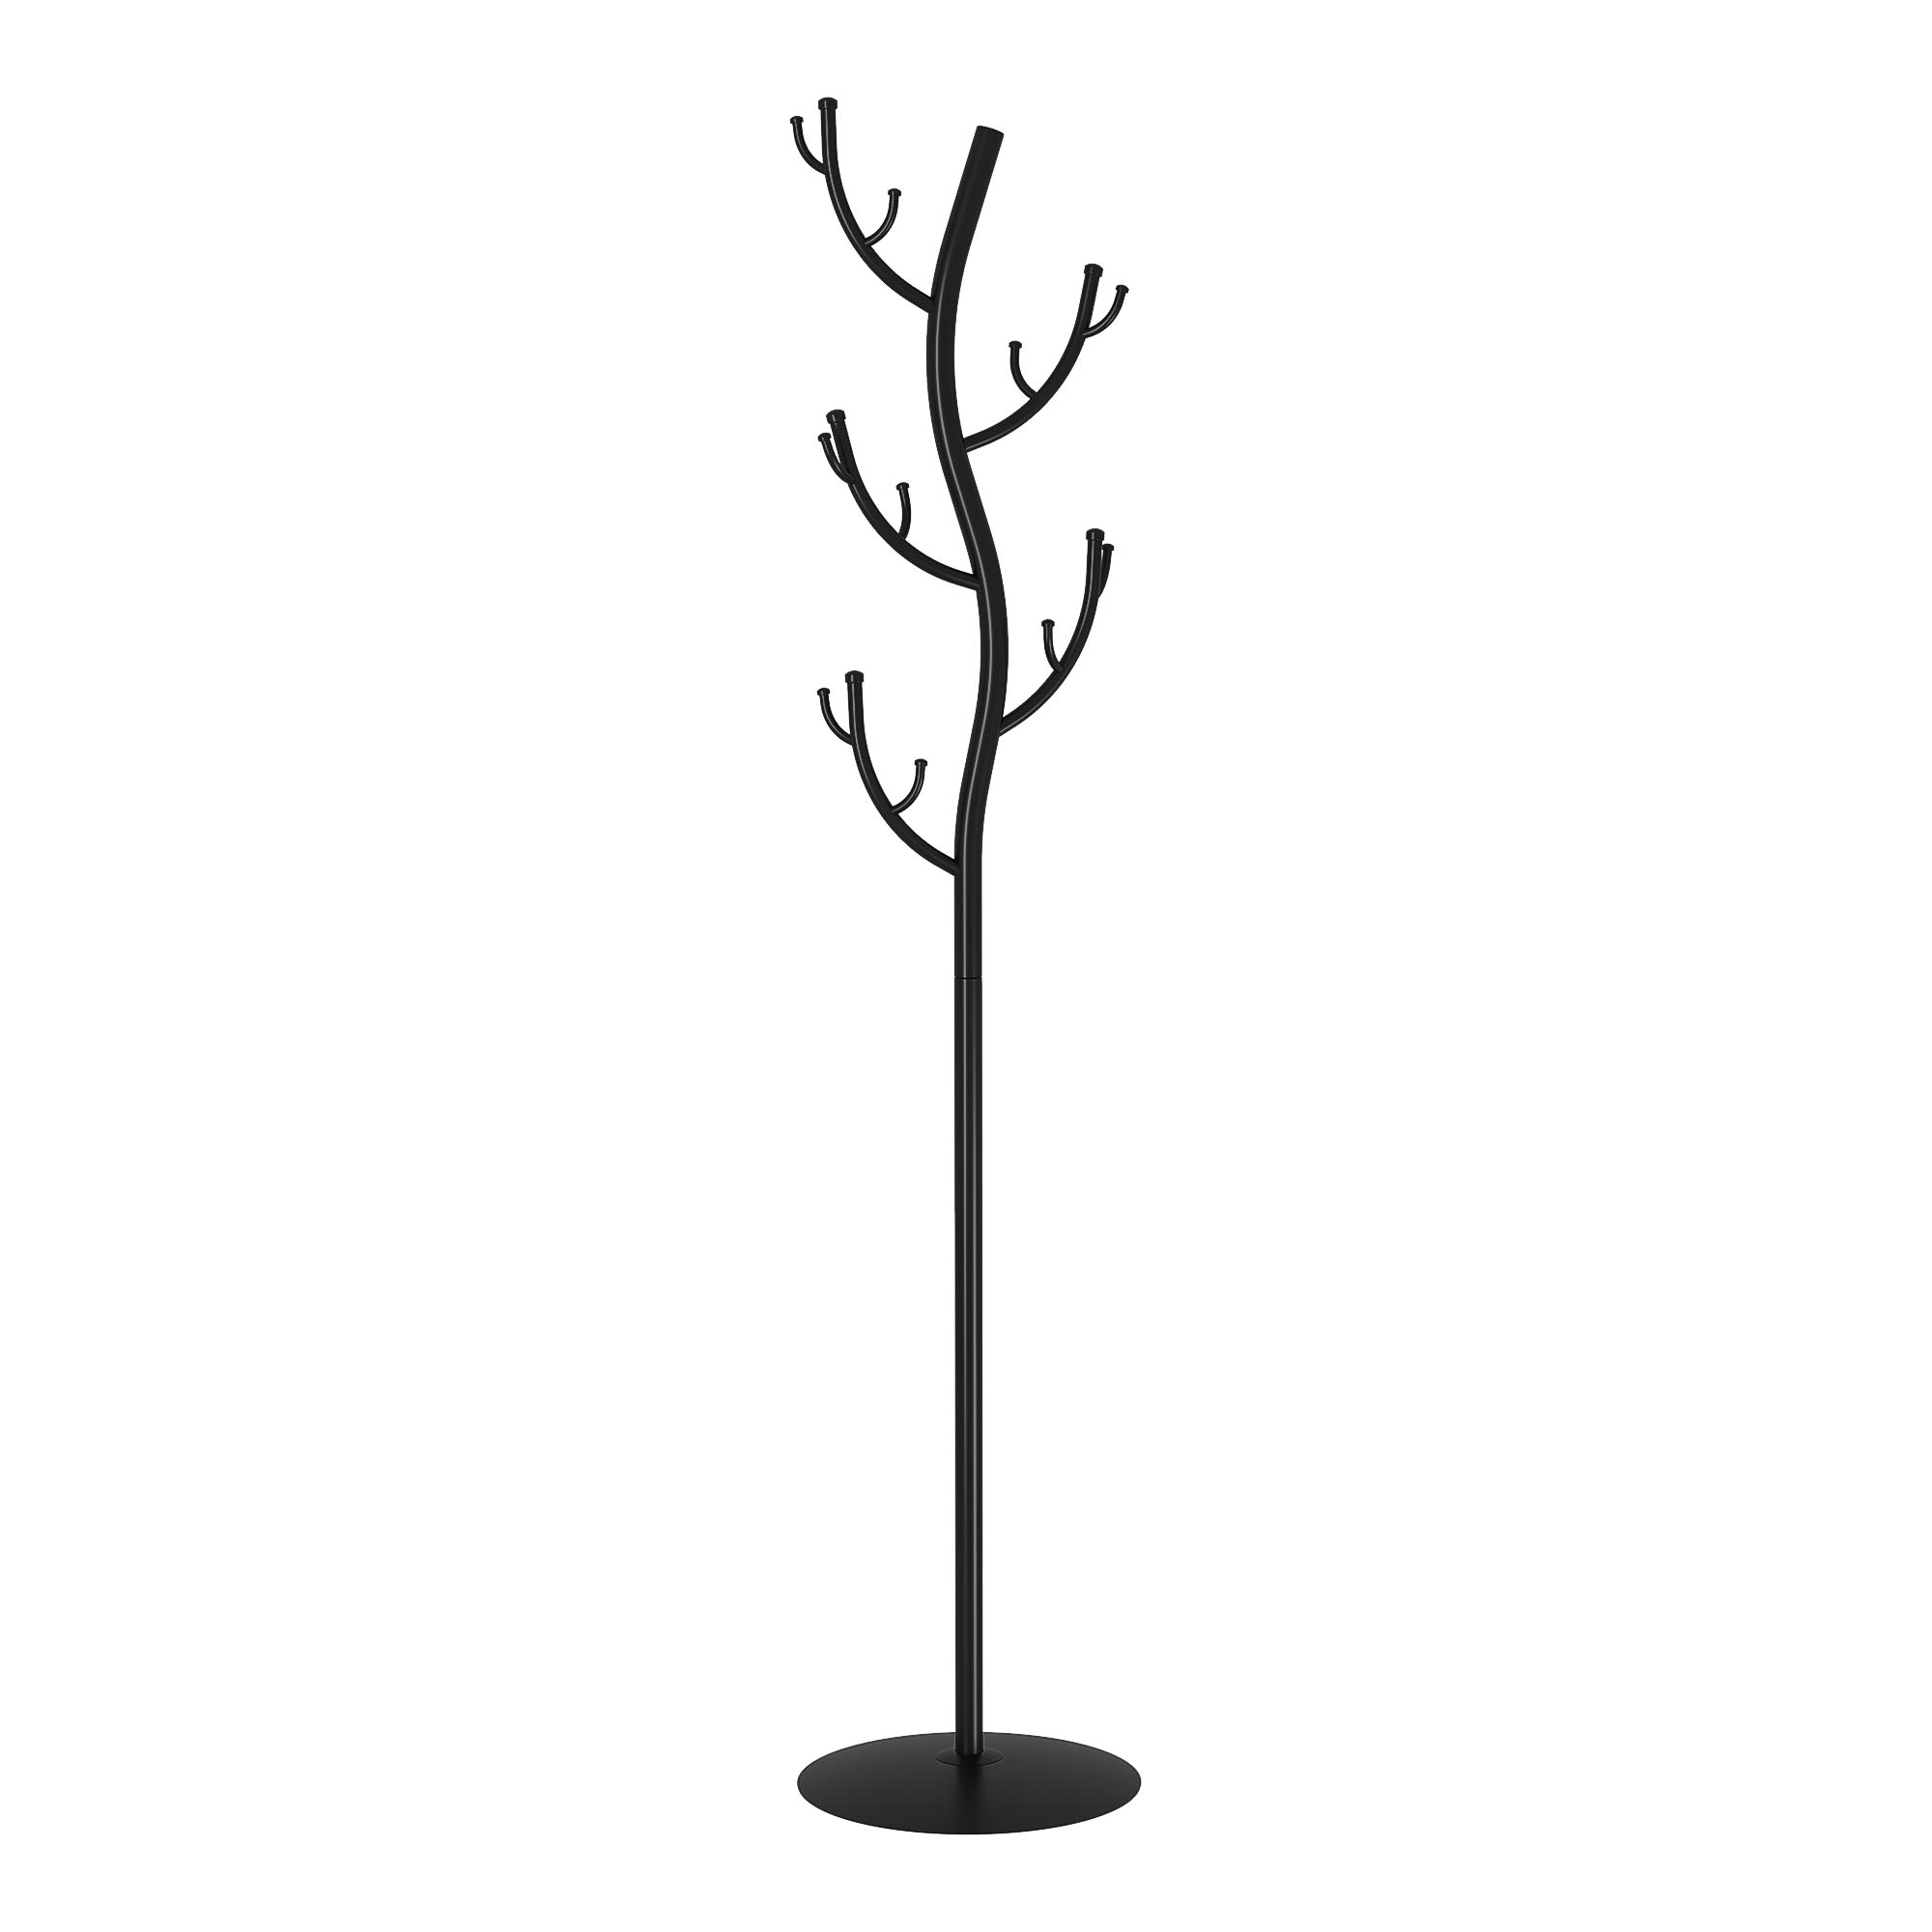 Вешалка напольная ЗМИ Дерево черная 37,5х37,5х181 см двойная напольная вешалка для одежды helex